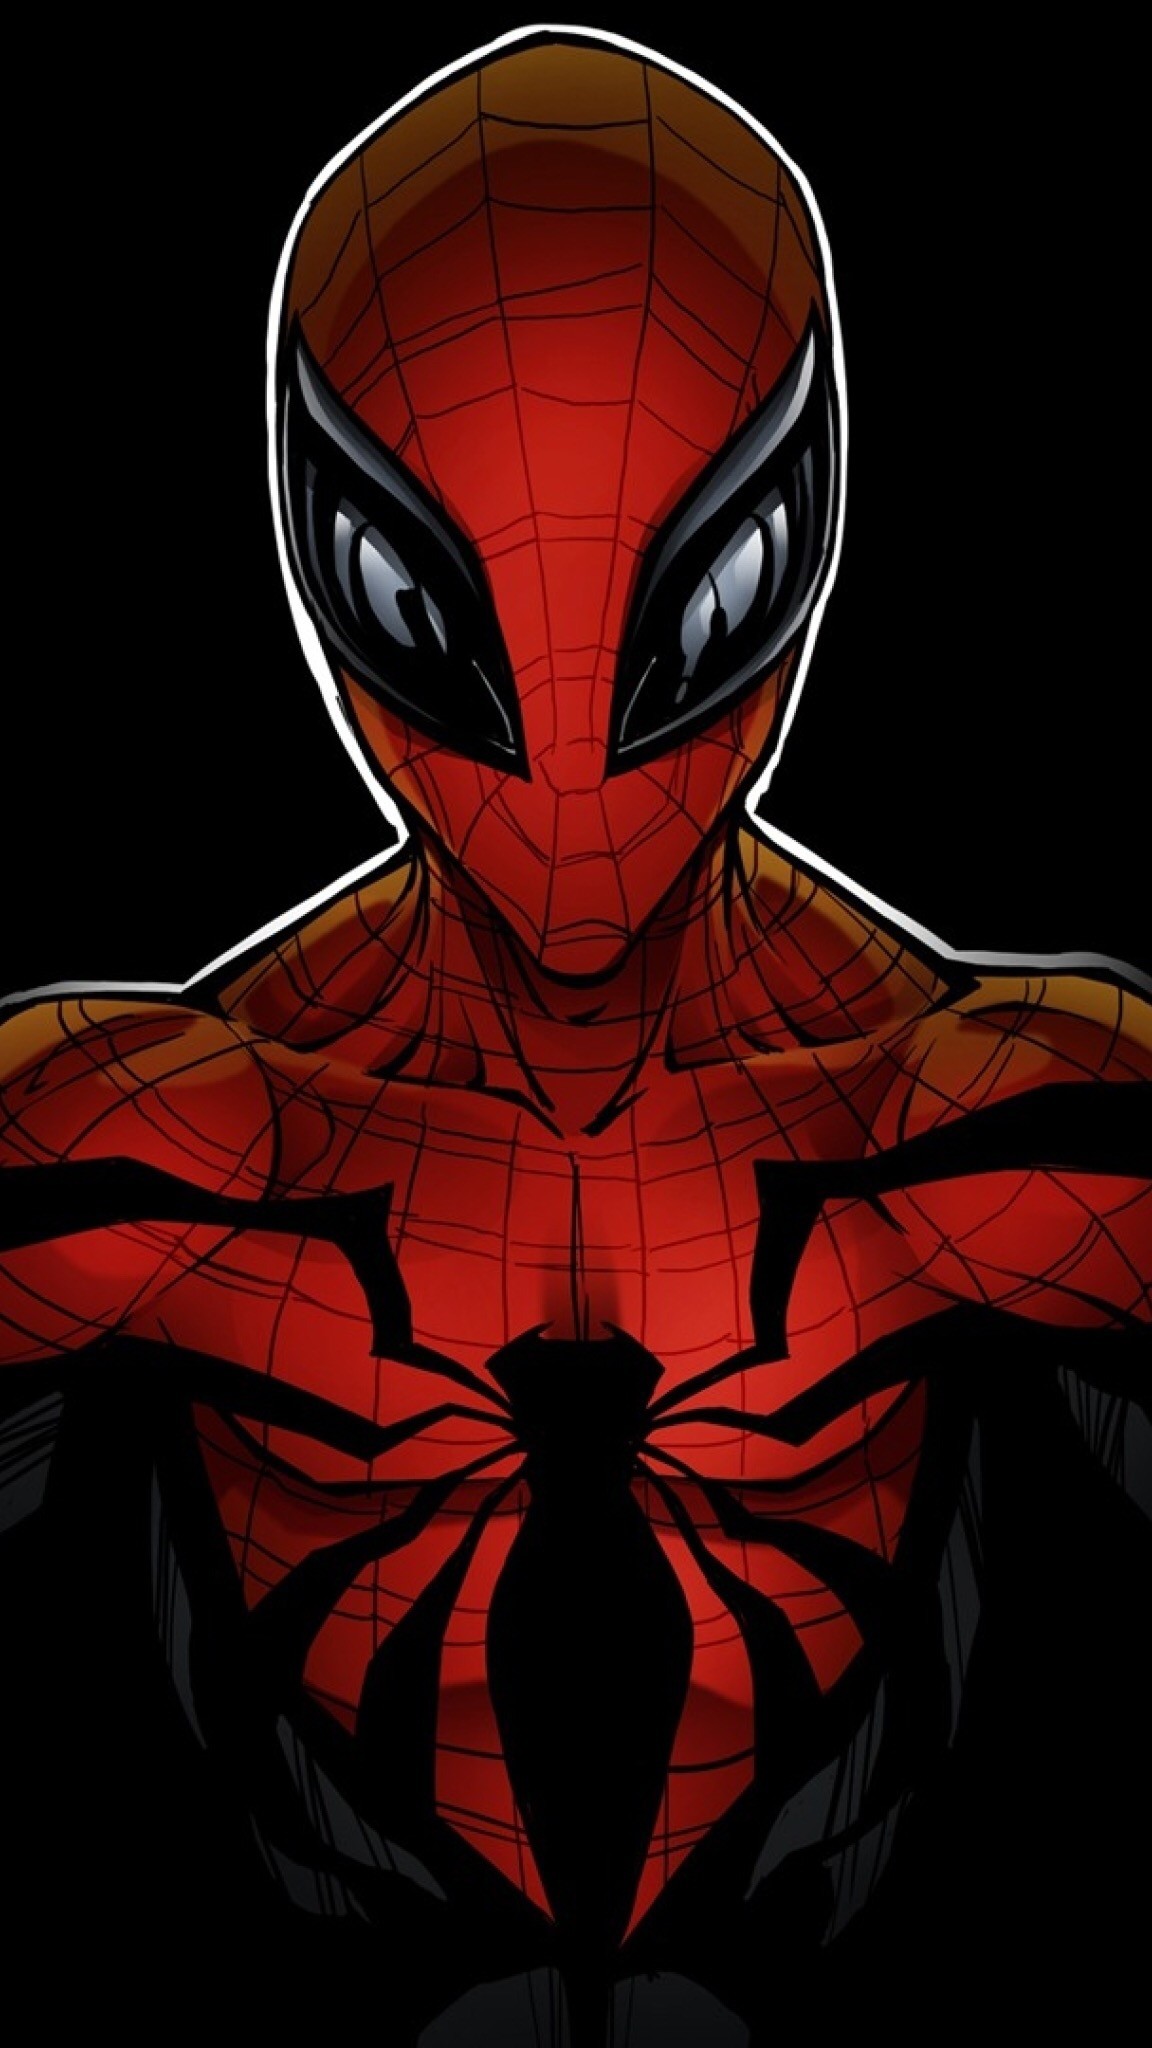 Black Backgrounds, Wallpaper Backgrounds, Spiderman Art, Spider Verse, Spider Man, Stan Lee, Color Pictures, Deadpool, Spin